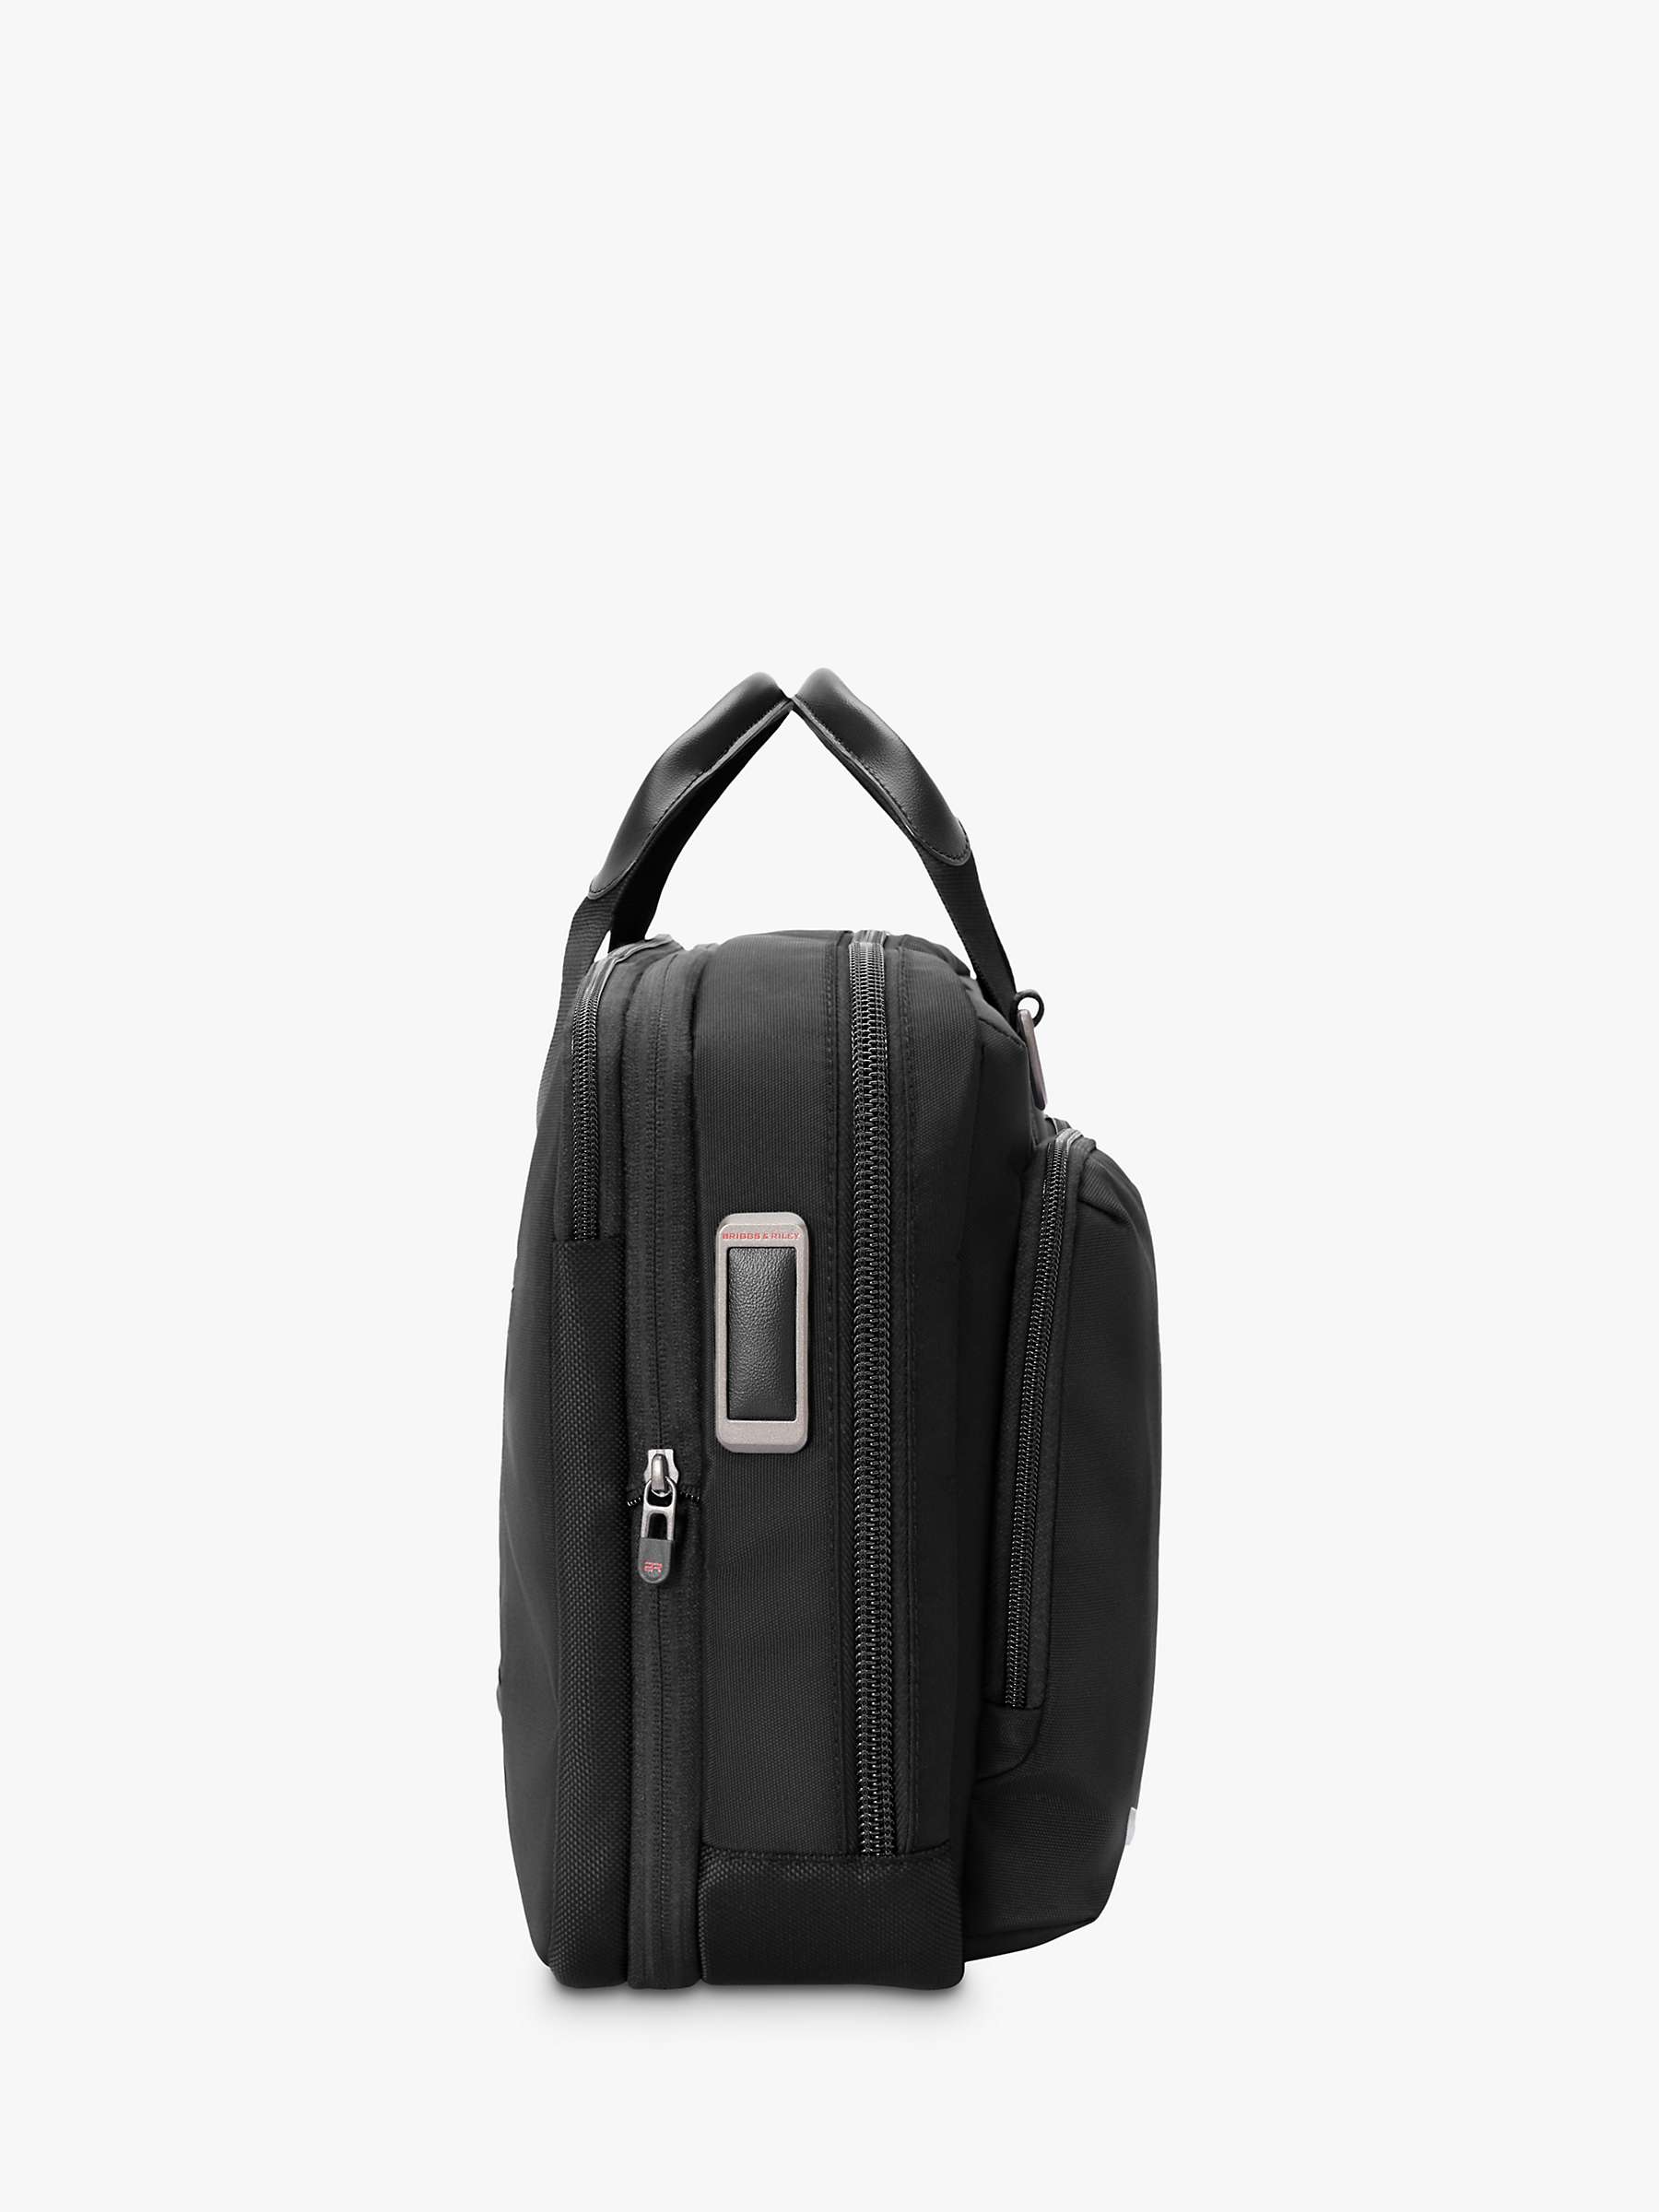 Buy Briggs & Riley HTA Medium Expandable Briefcase, Black Online at johnlewis.com